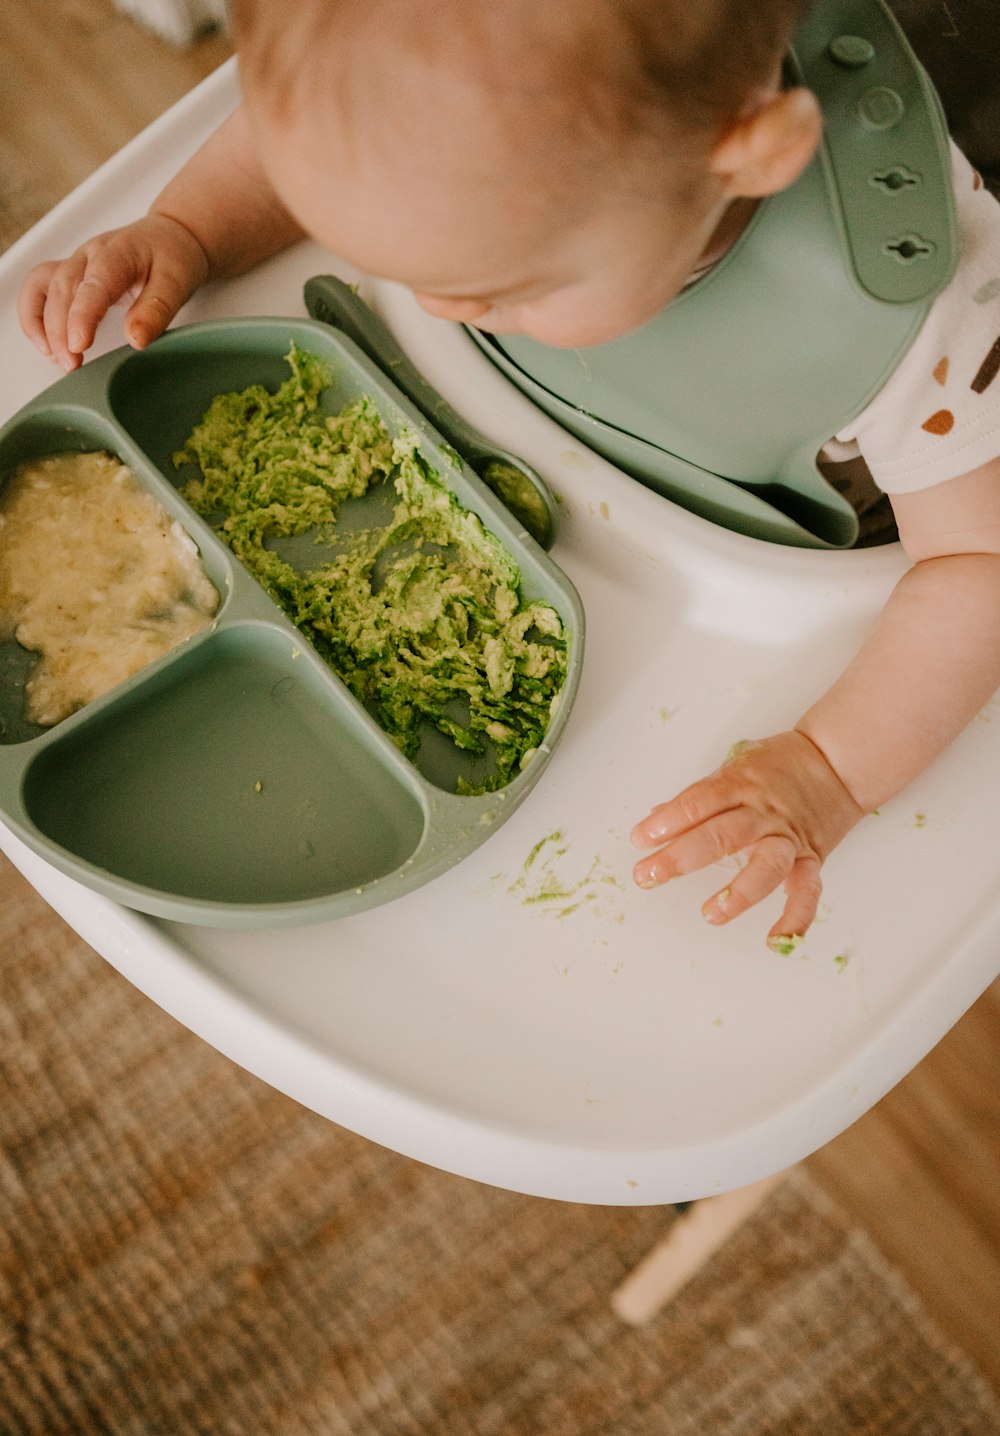 a baby eating broccoli